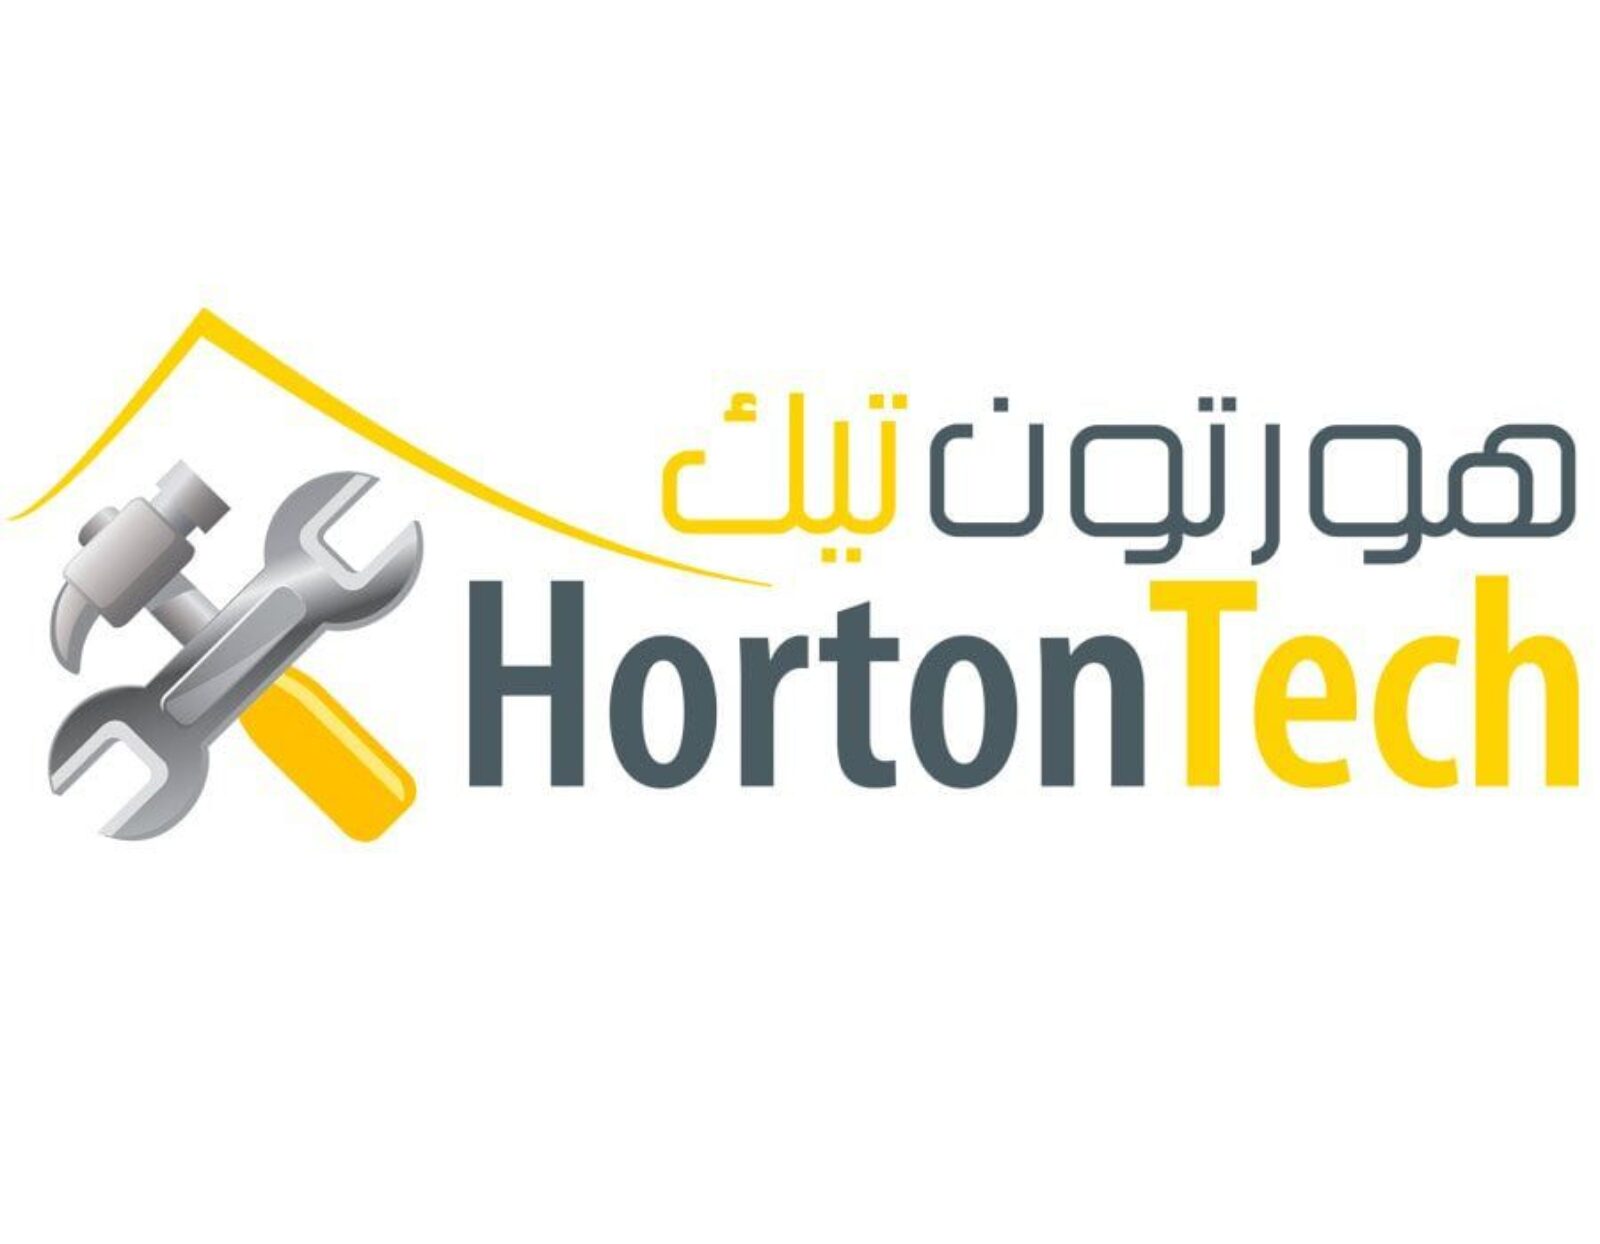 Logo Designing - HortonTech Property Services